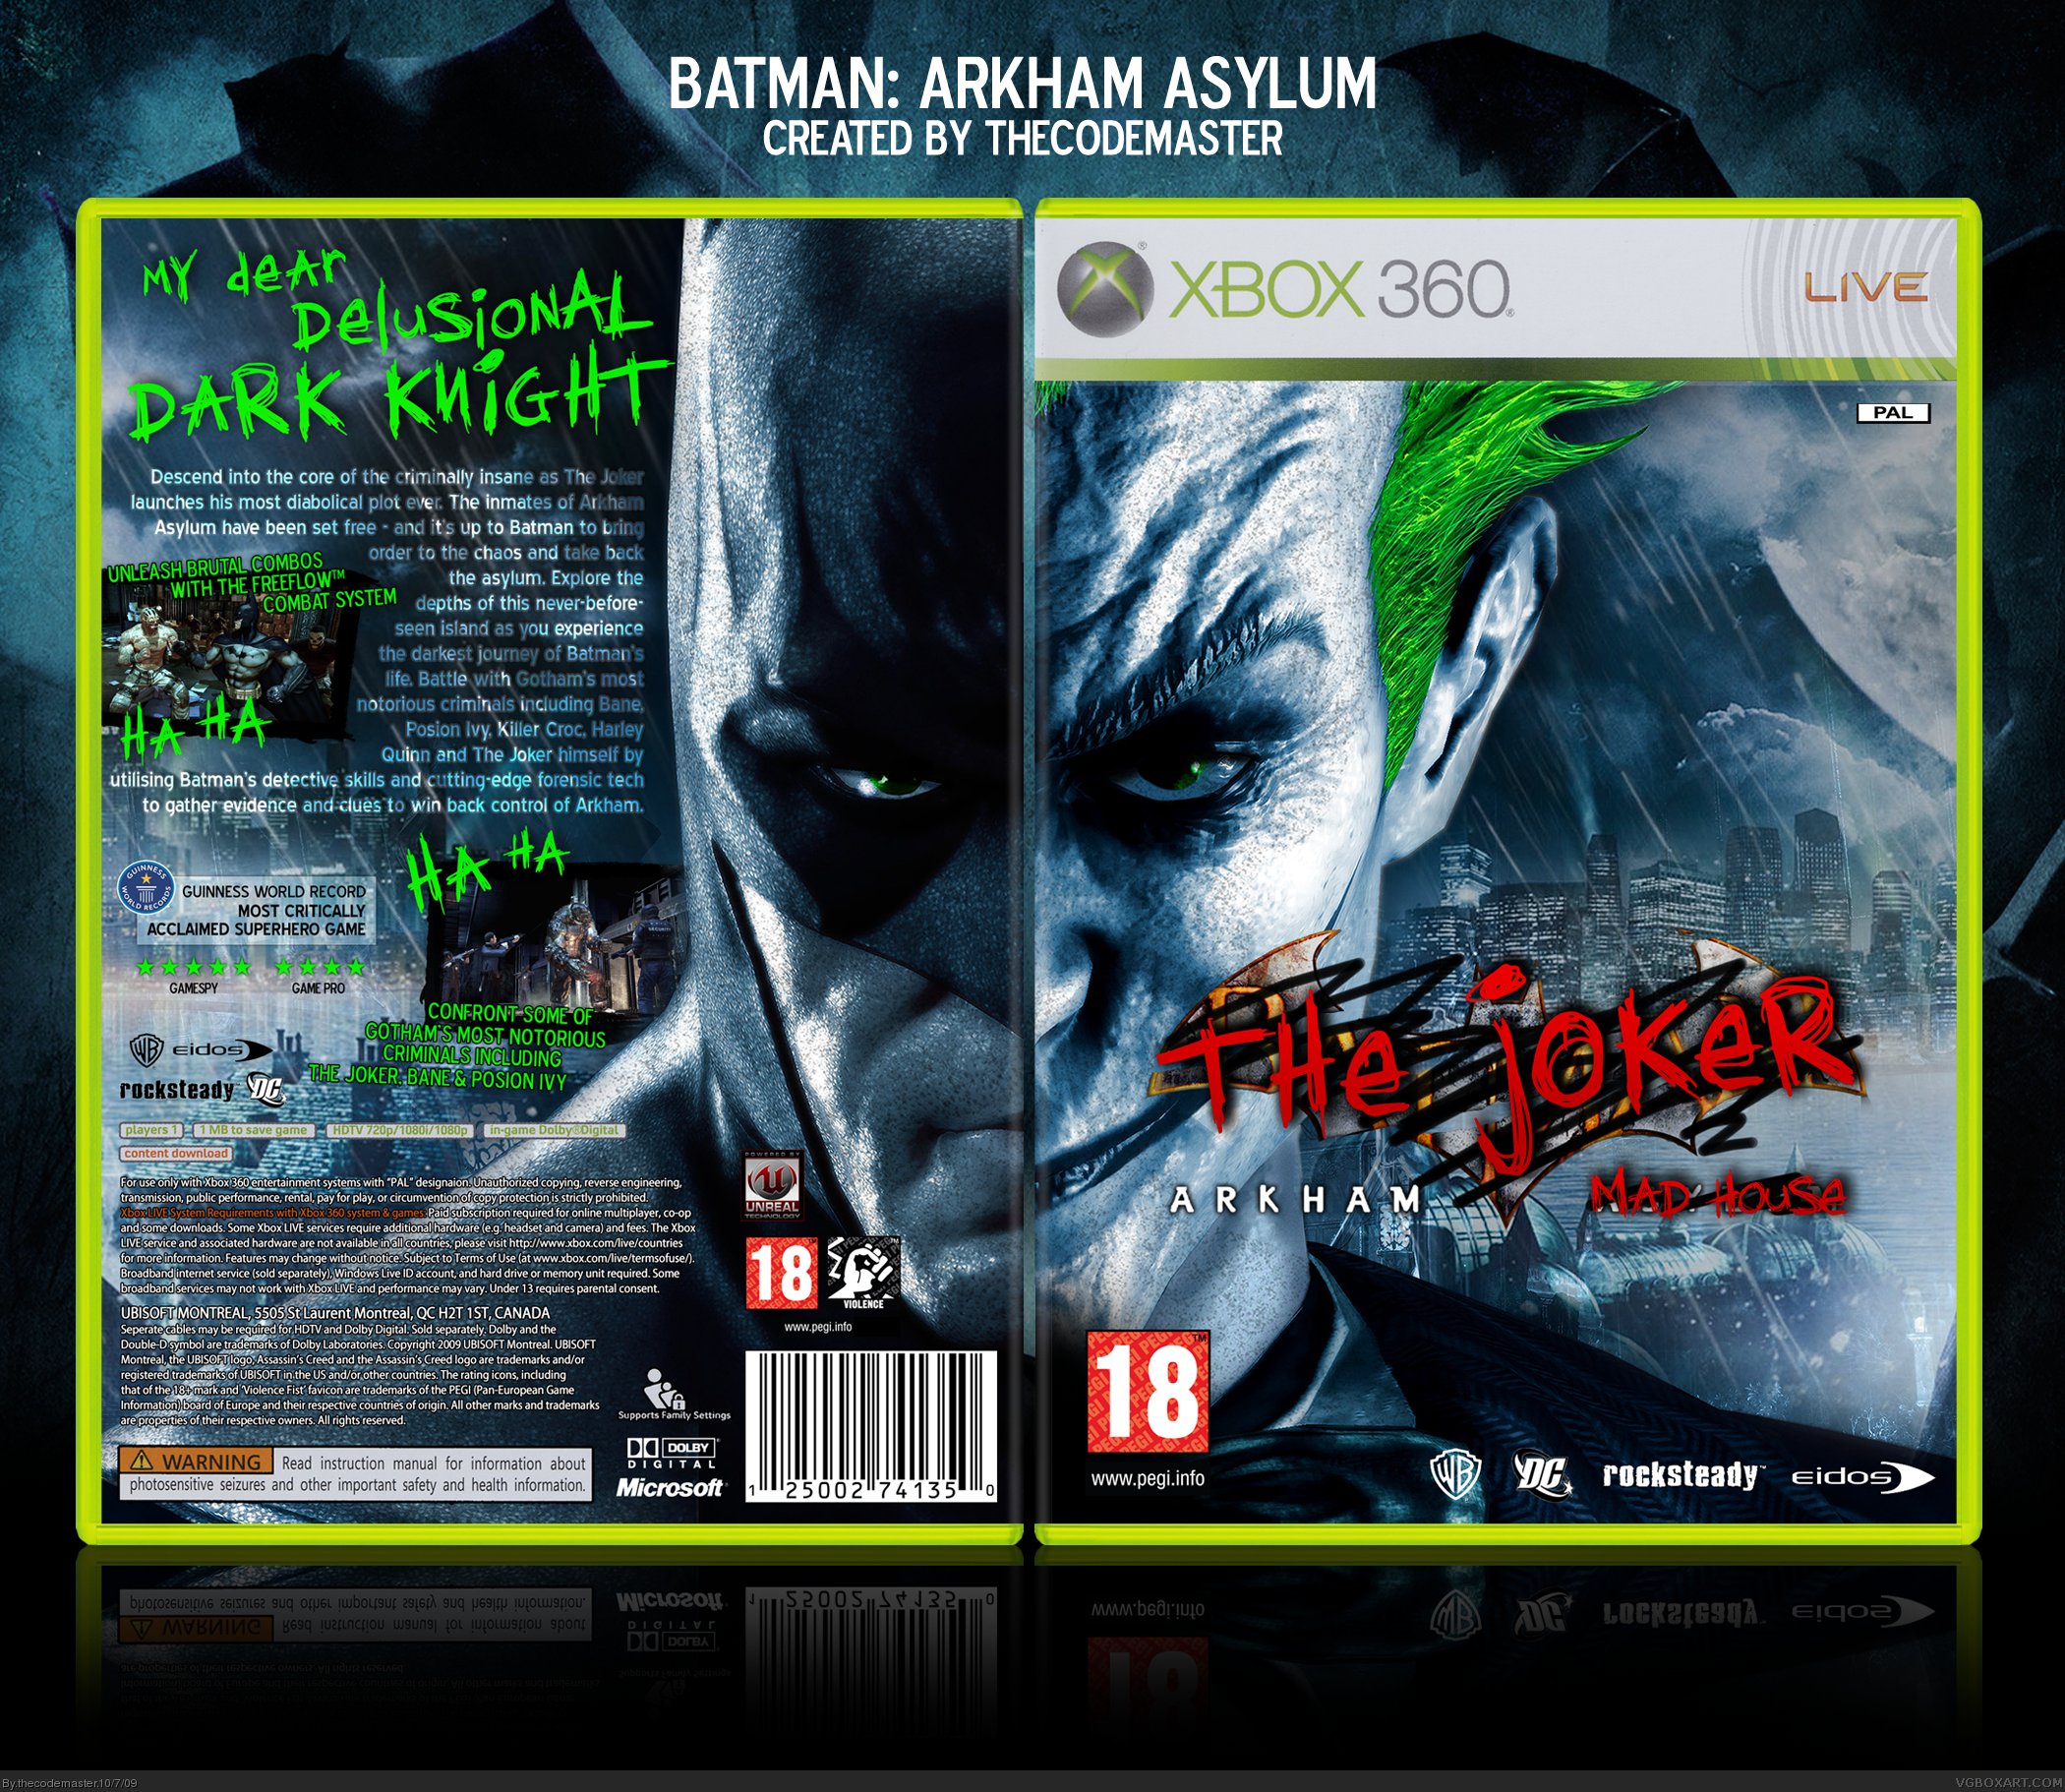 cheat codes for batman arkham asylum xbox 360